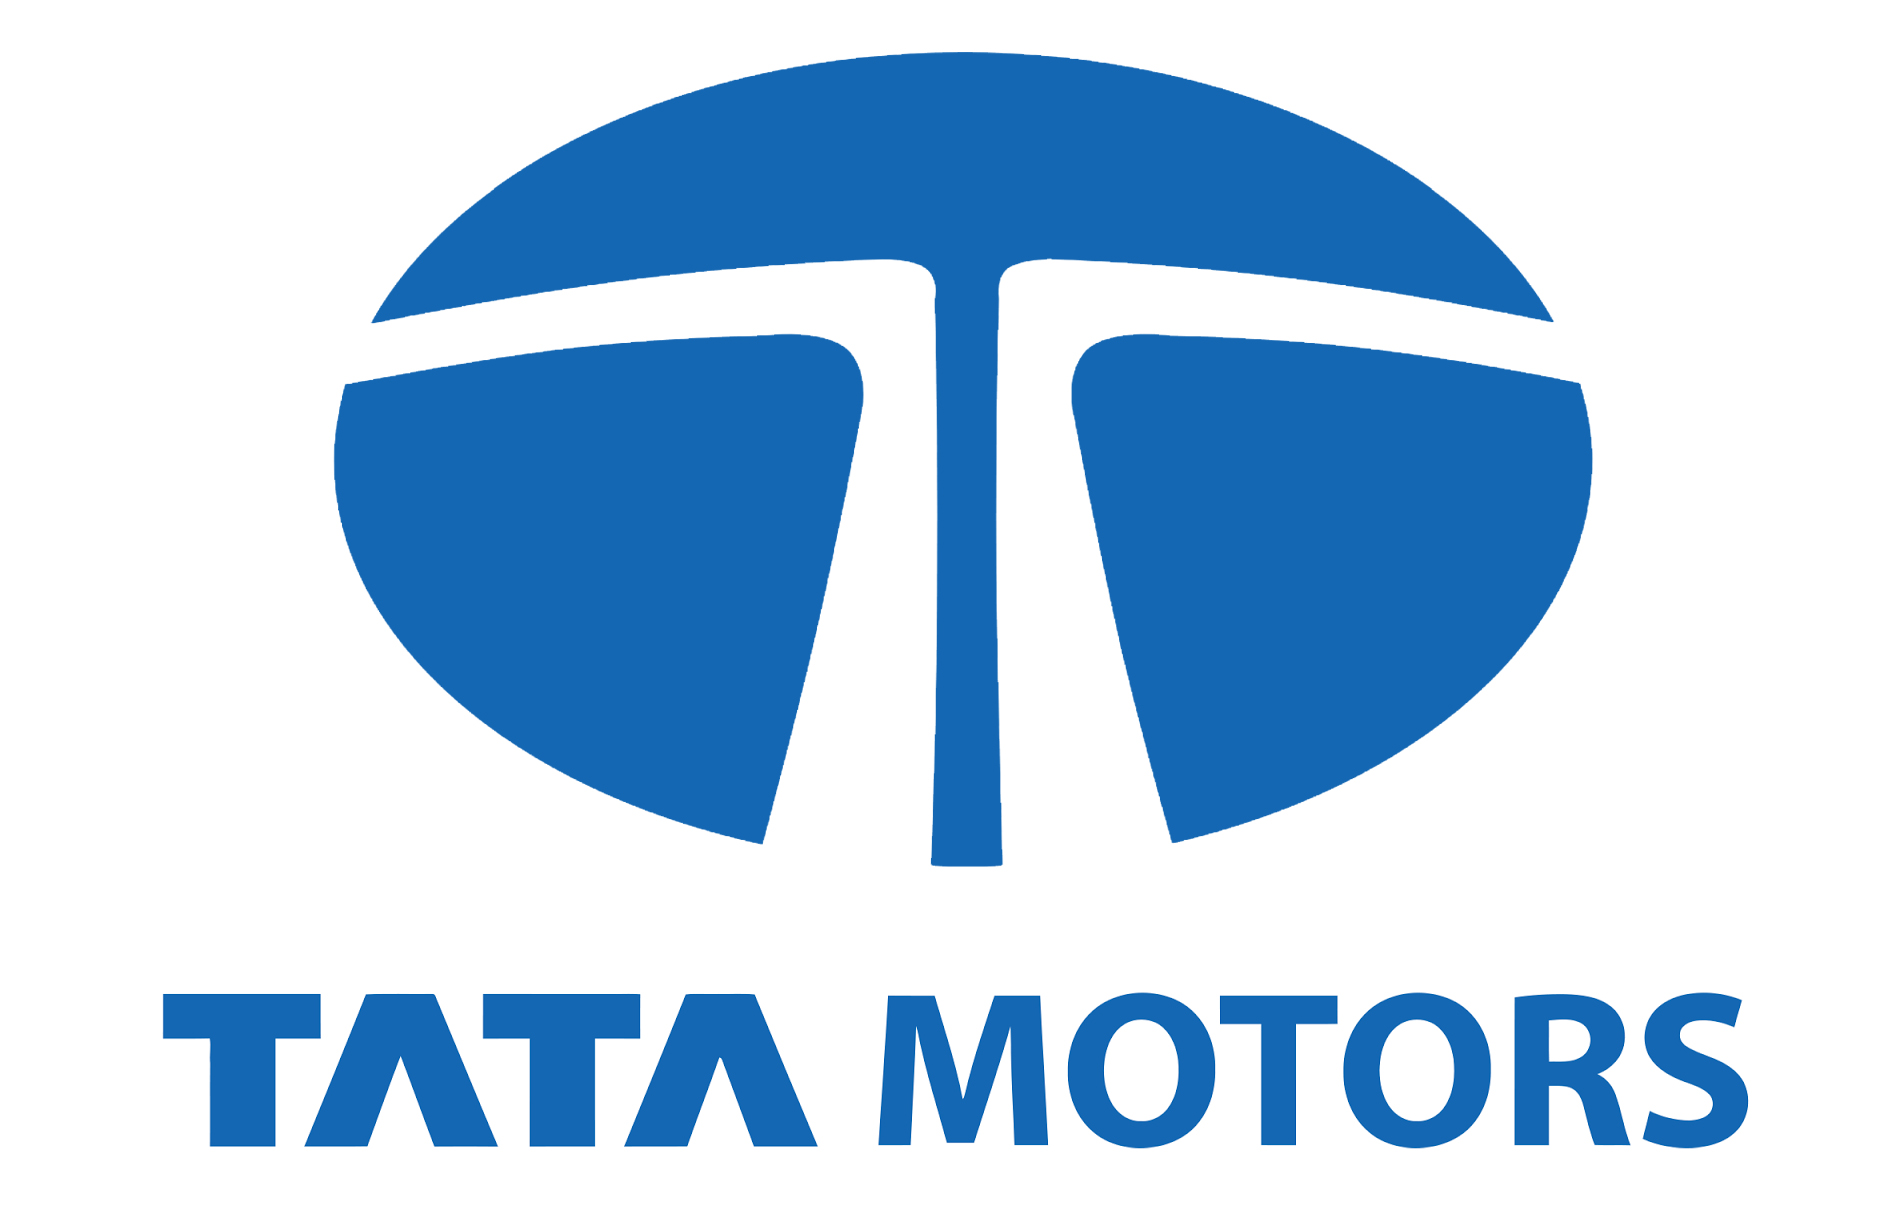 Tata Motors Cars Showroom - Brijwheel Automobiles Private Limited|Show Room|Automotive